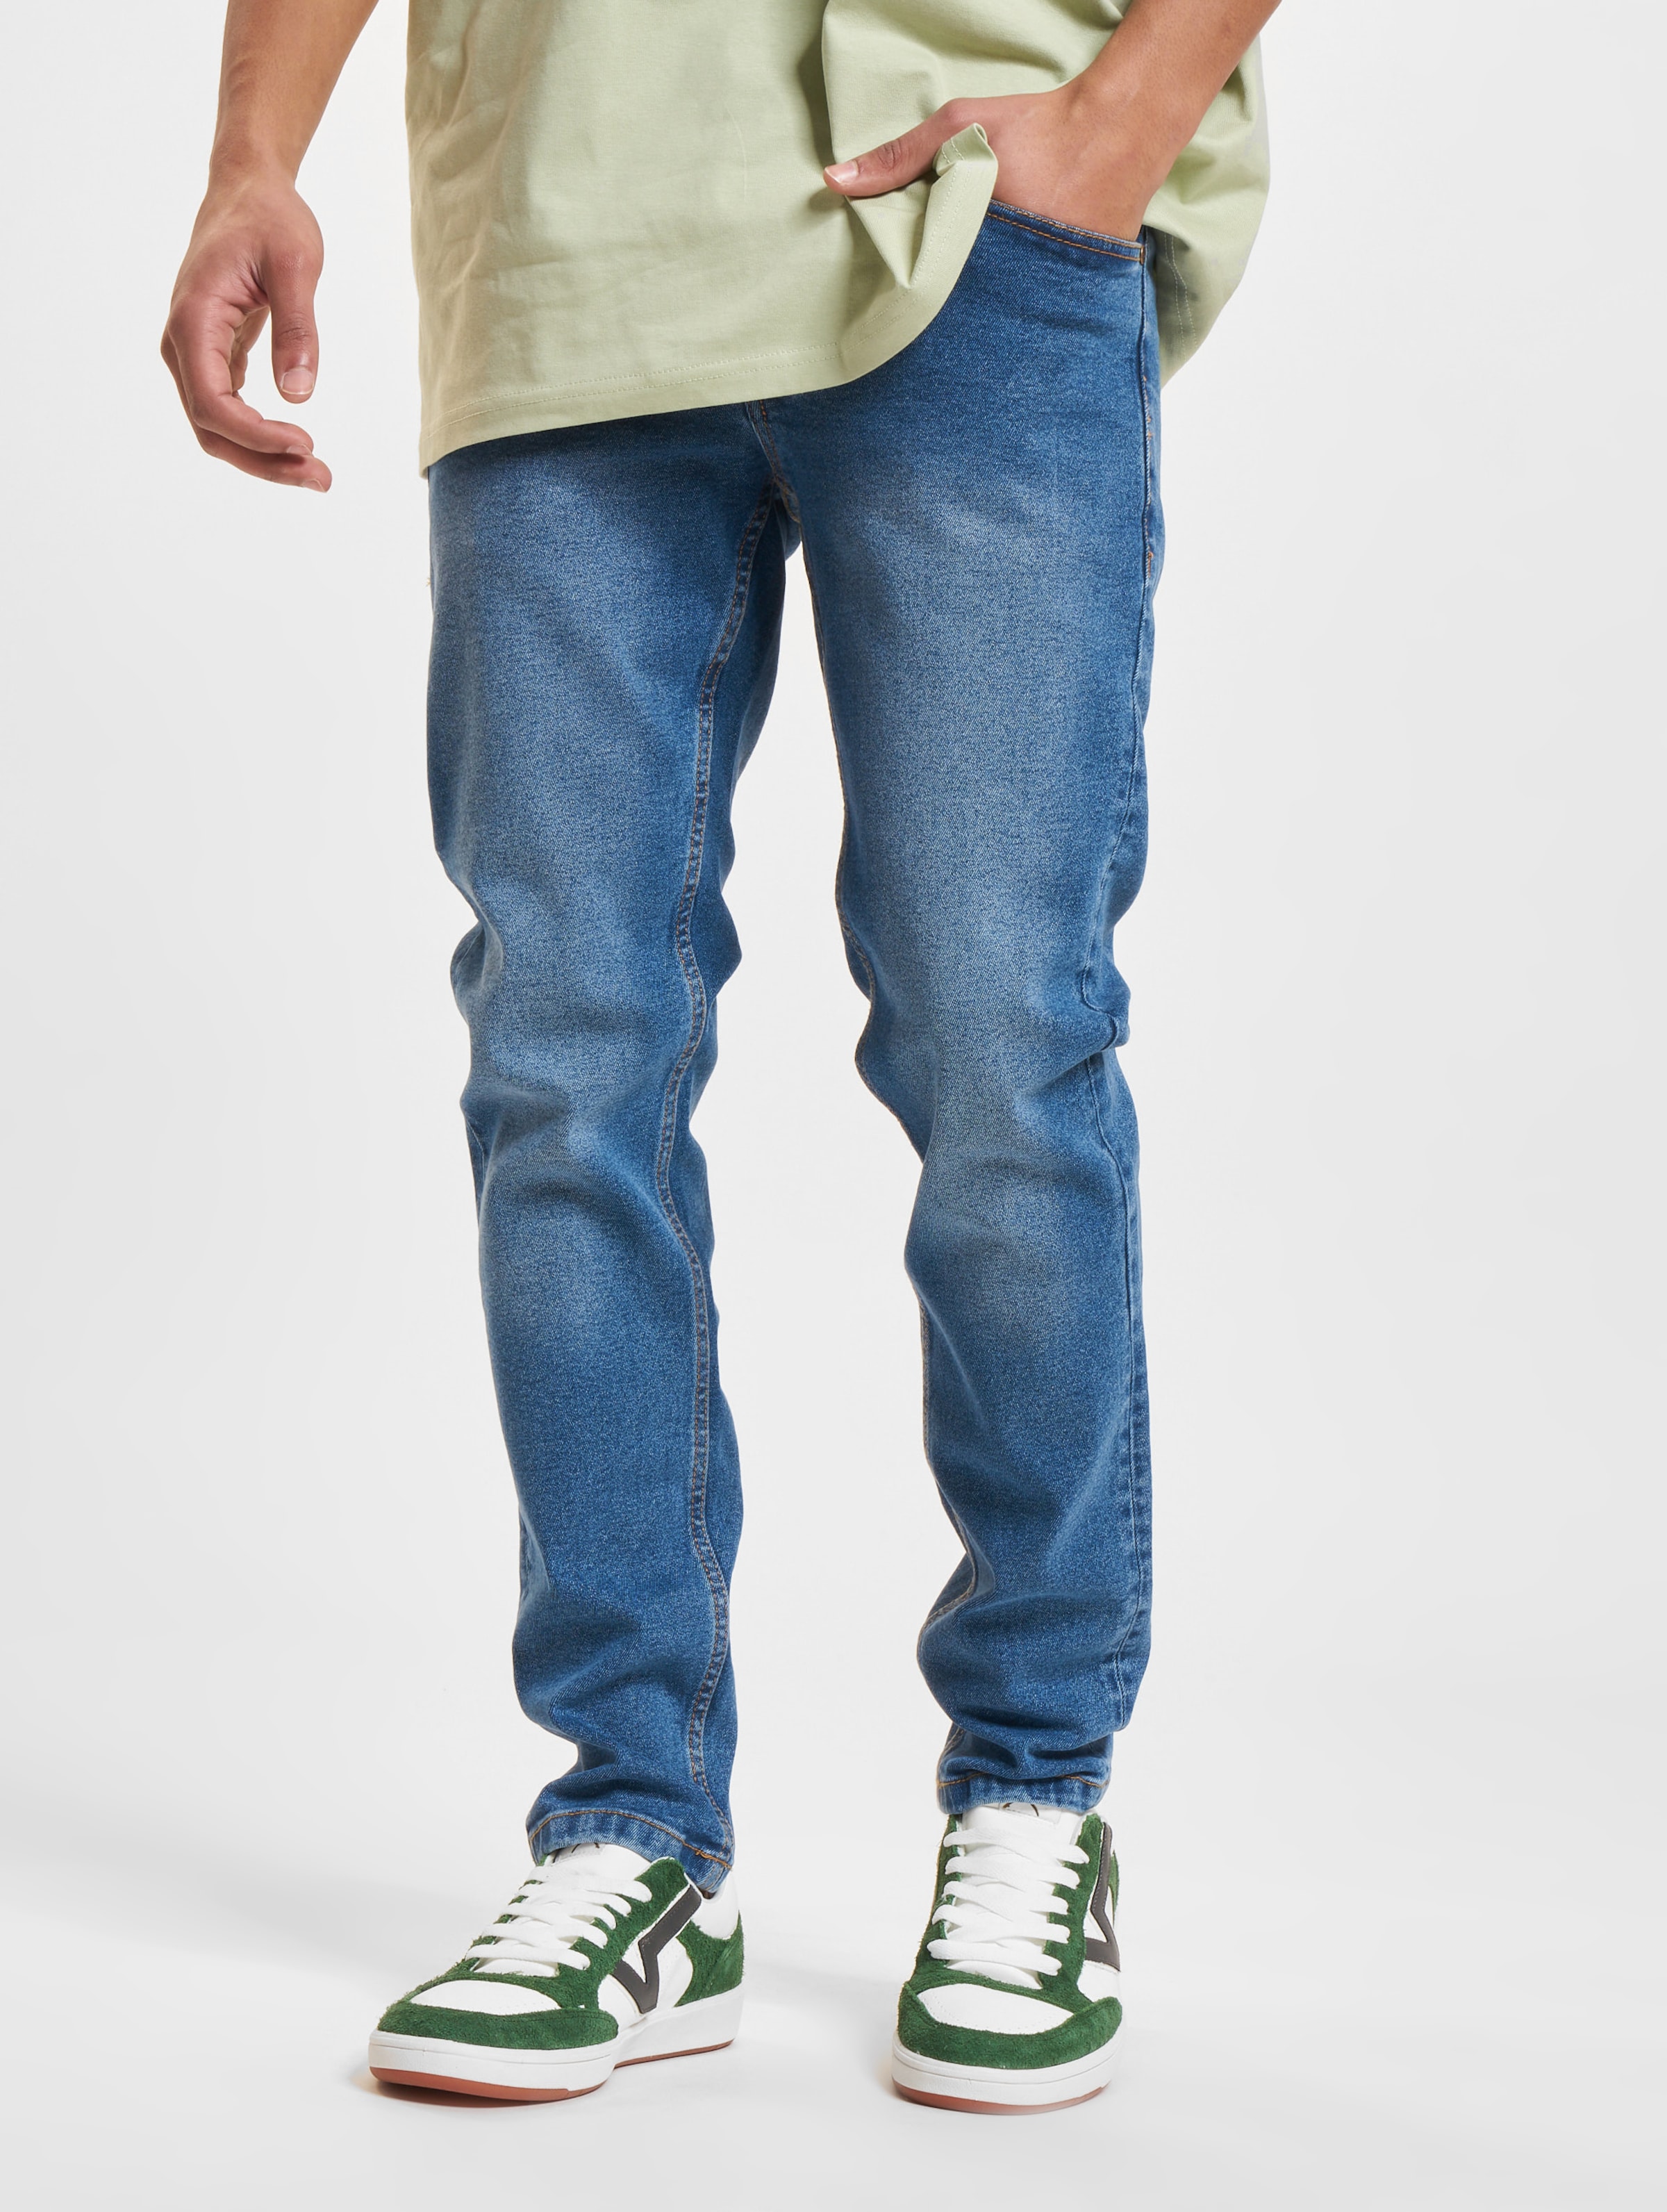 Denim Project Mr. Red Skinny Fit Jeans Mannen op kleur blauw, Maat 3134_1